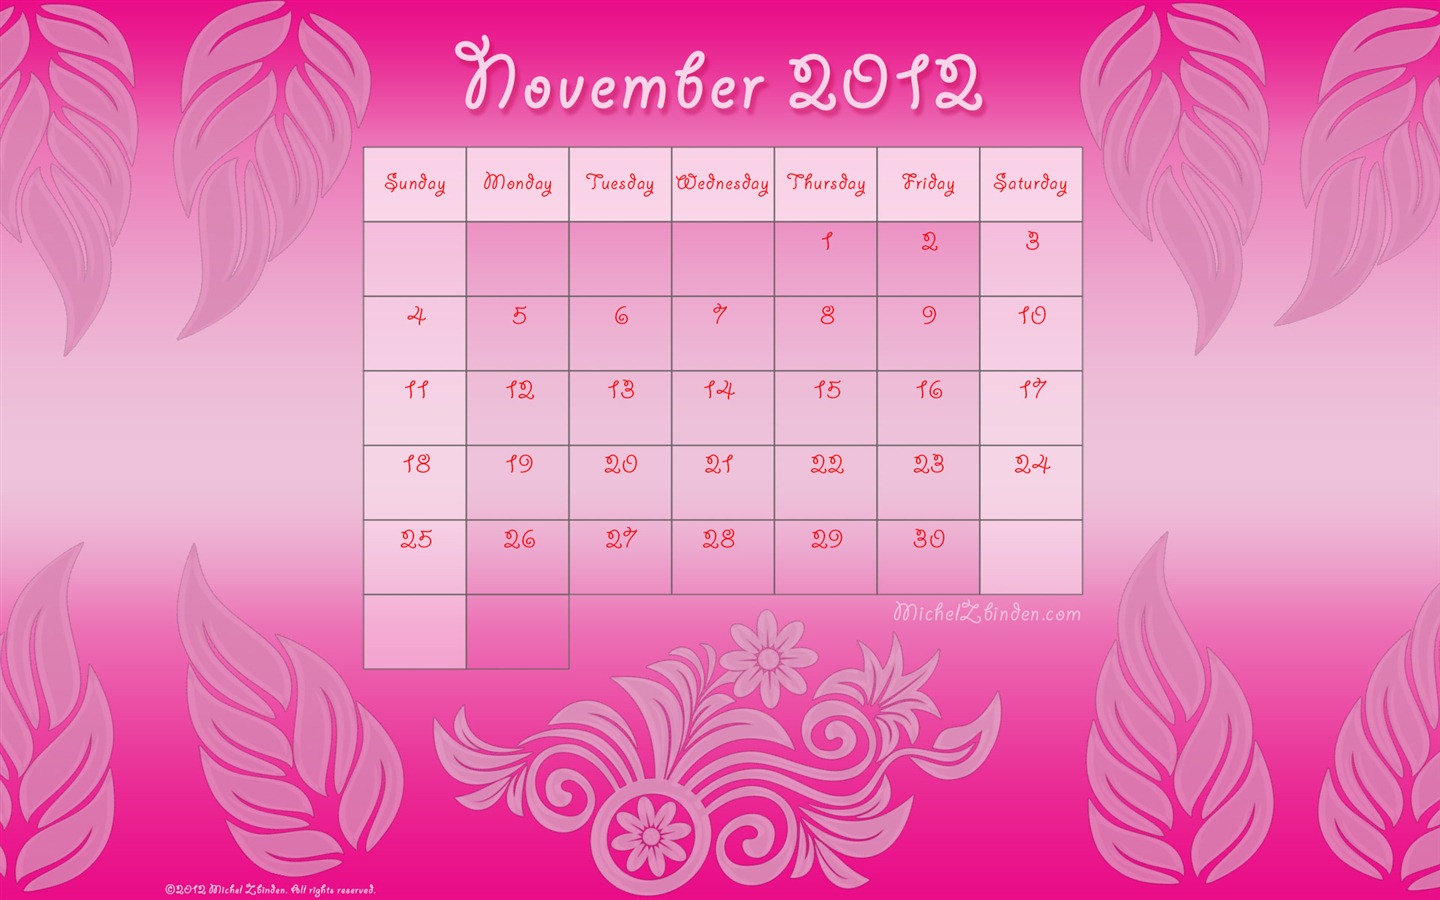 November 2012 Calendar wallpaper (1) #3 - 1440x900